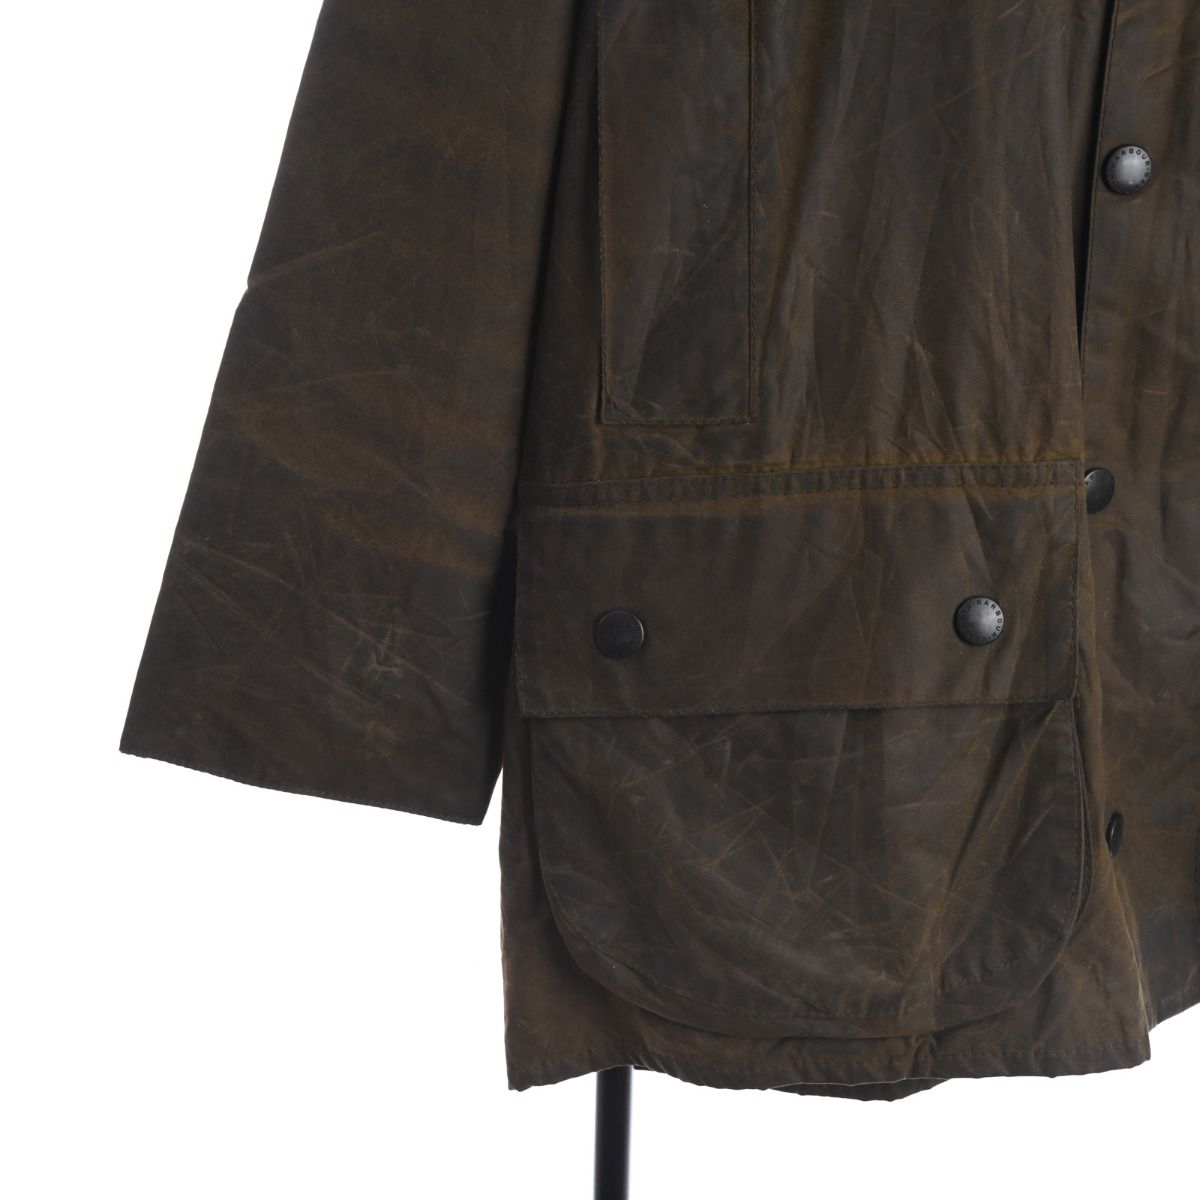 Barbour Beaufort Wax Cotton Brown Jacket With Elegant Collar